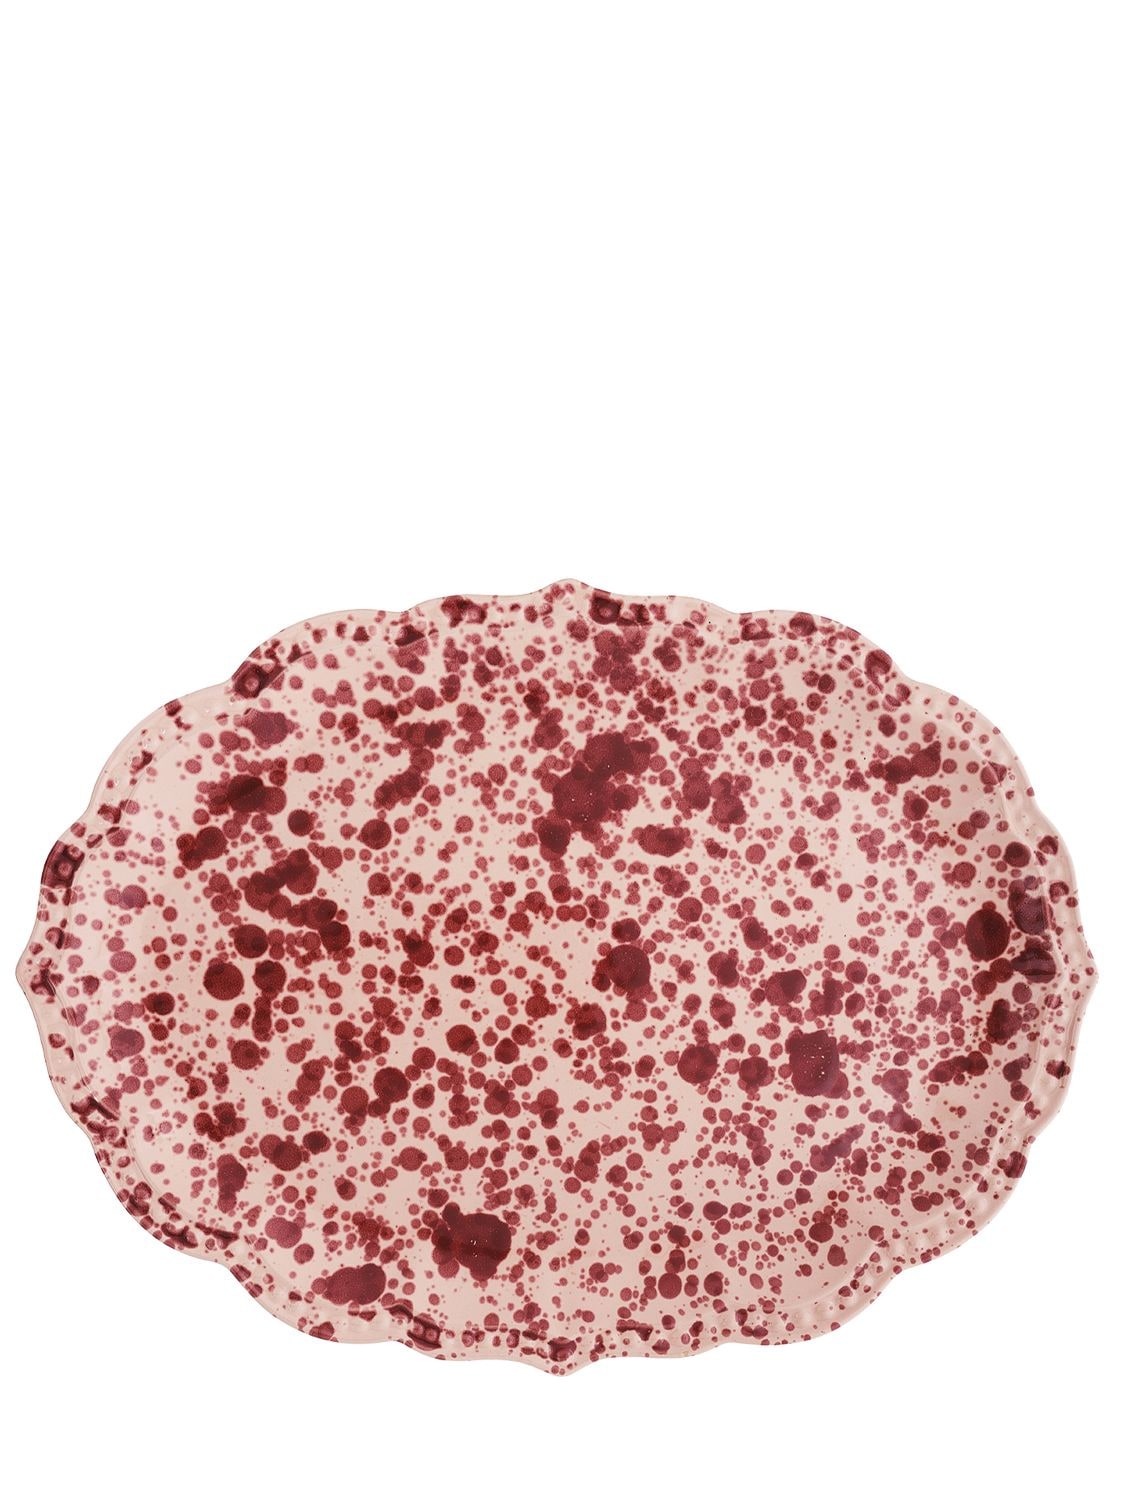 Image of Speckled Serving Plate